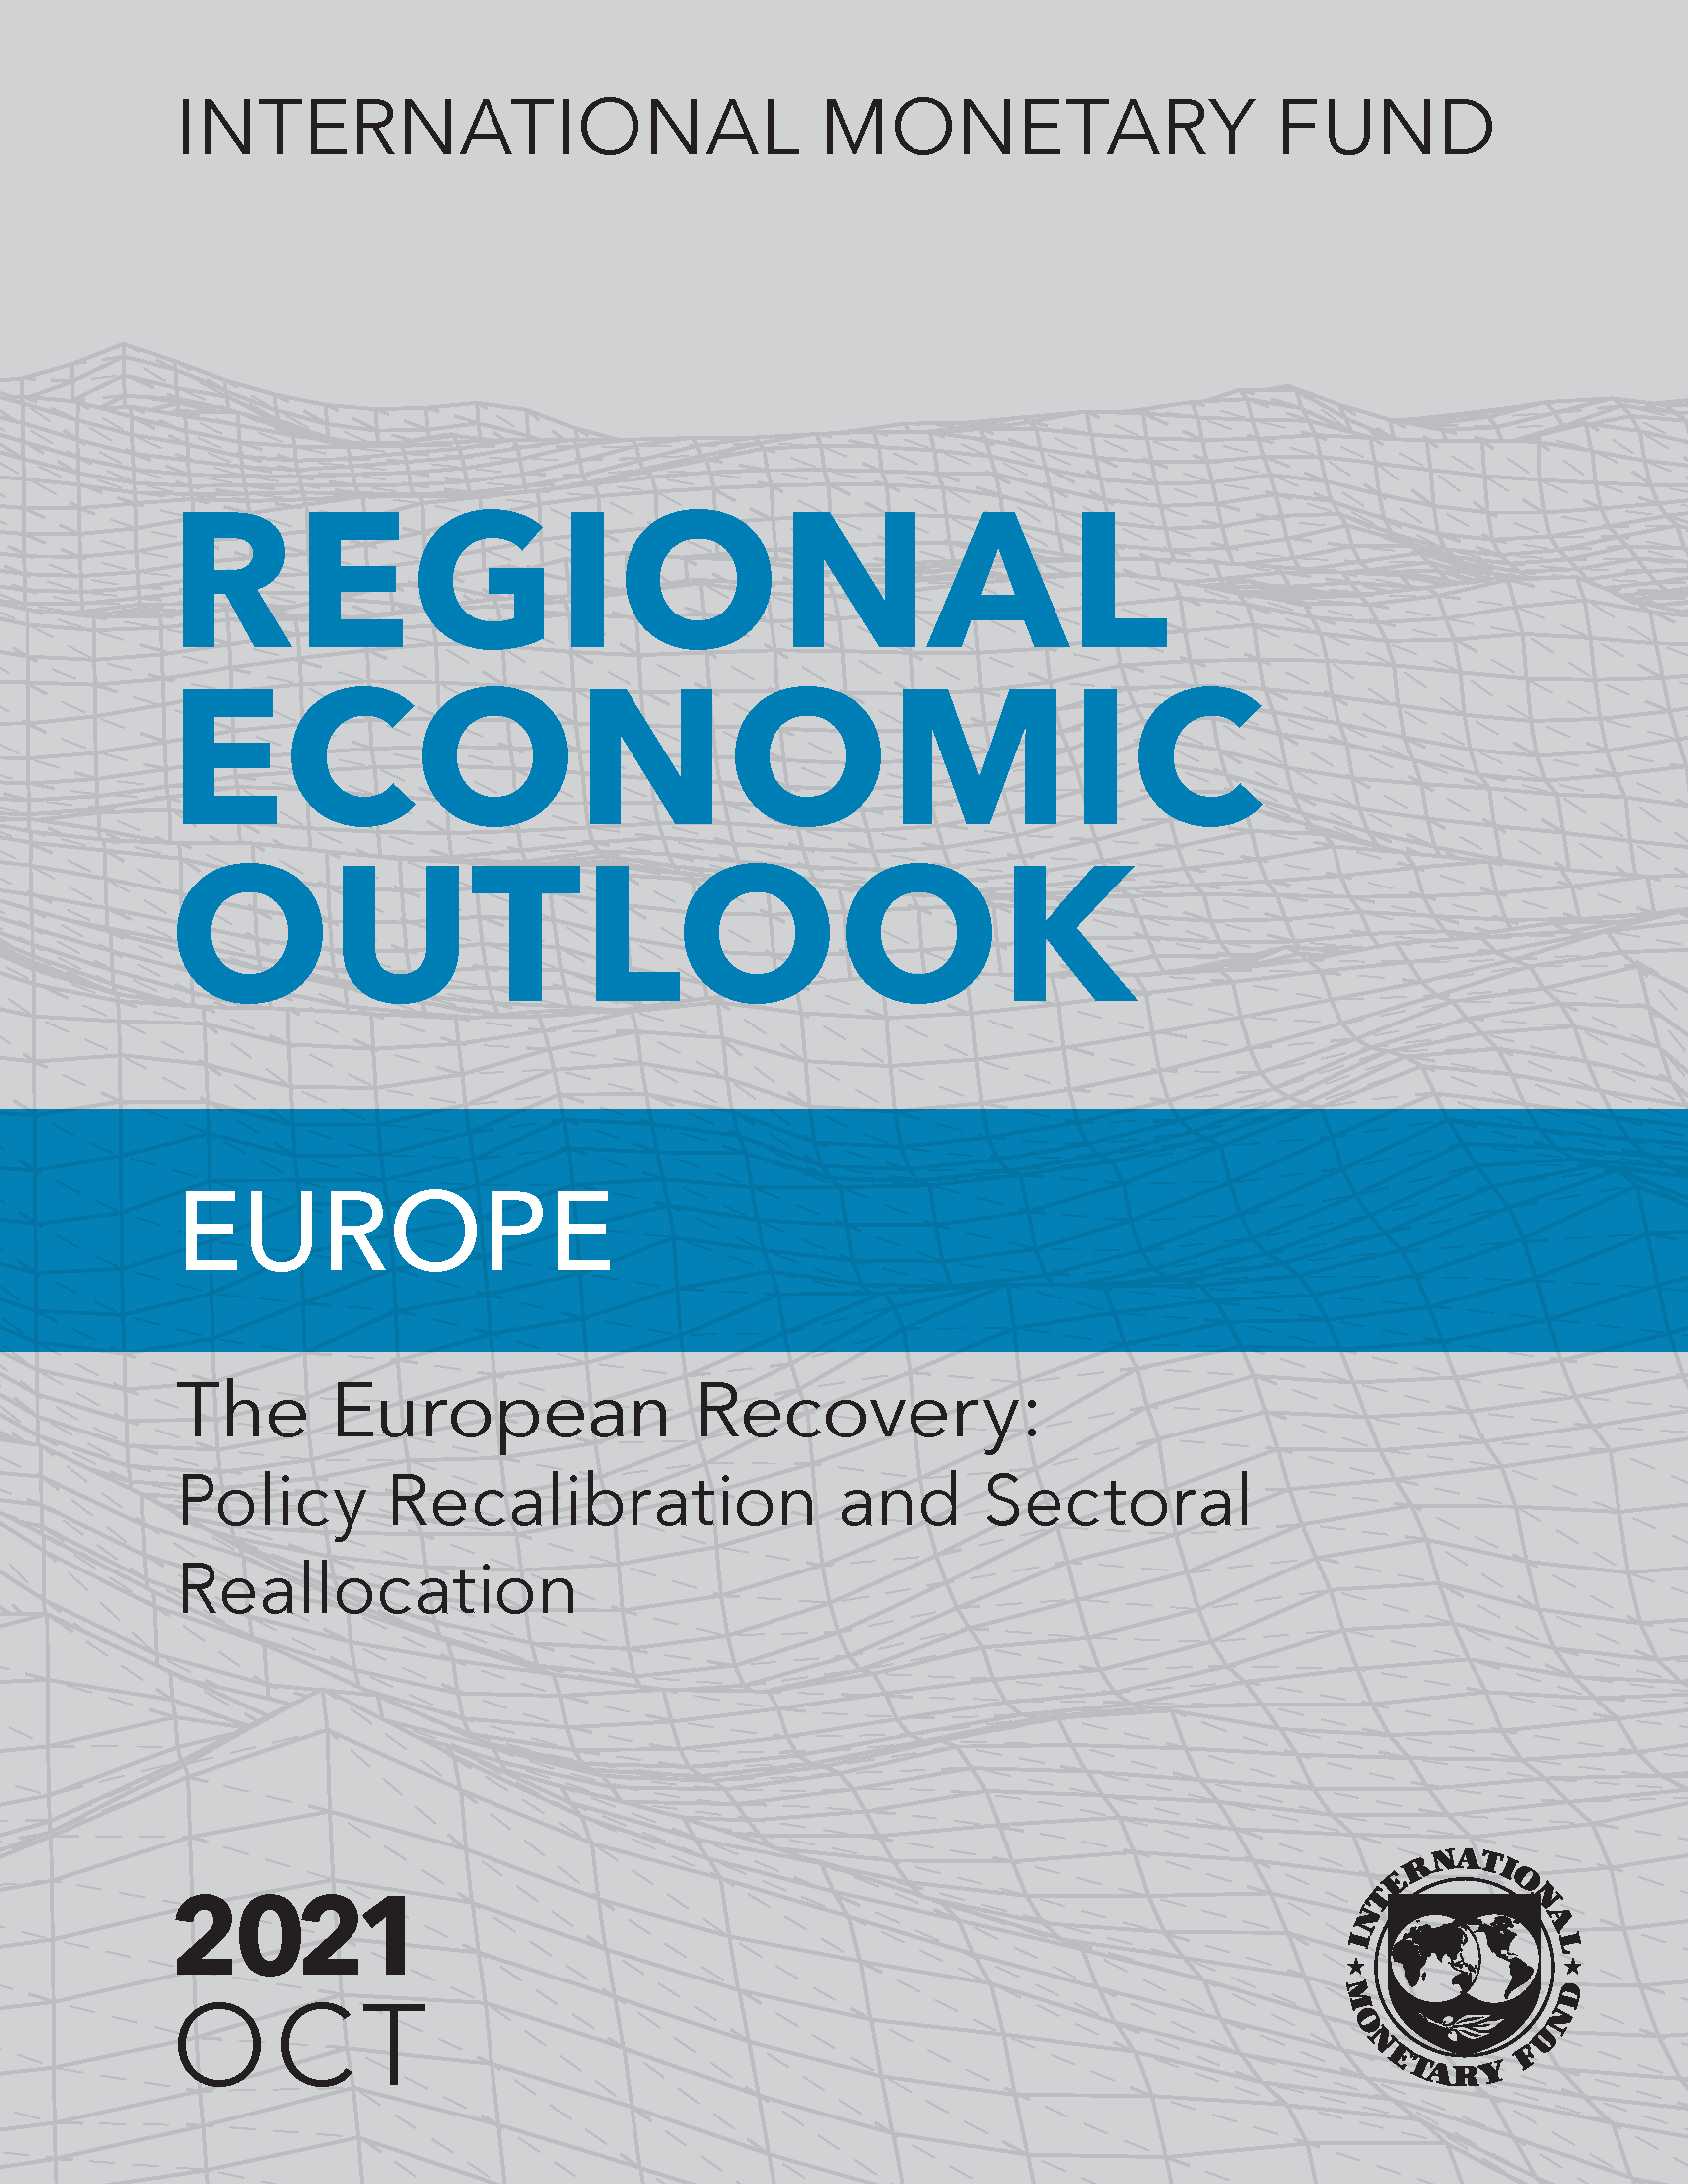 Regional Economic Outlook for Europe, October 2021